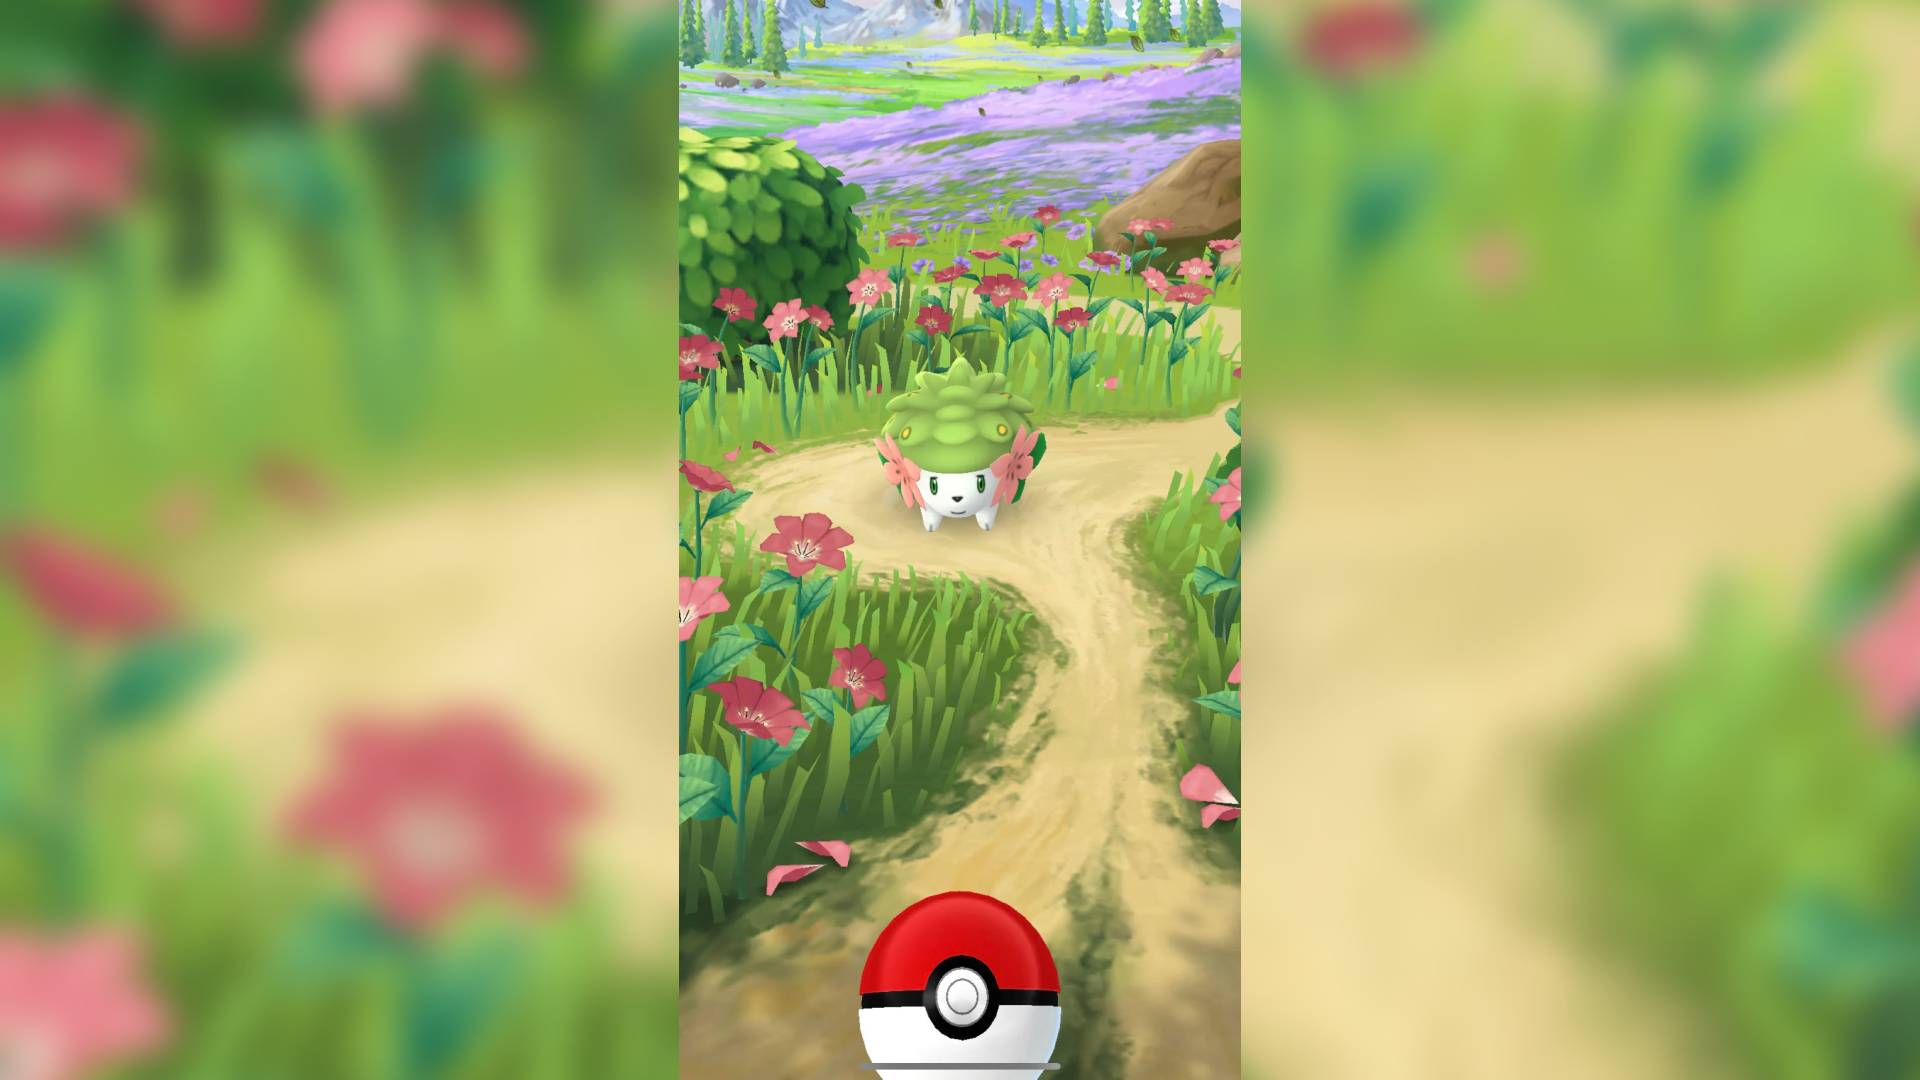 How to get Shaymin in Pokémon Go, Sustainability Week explained